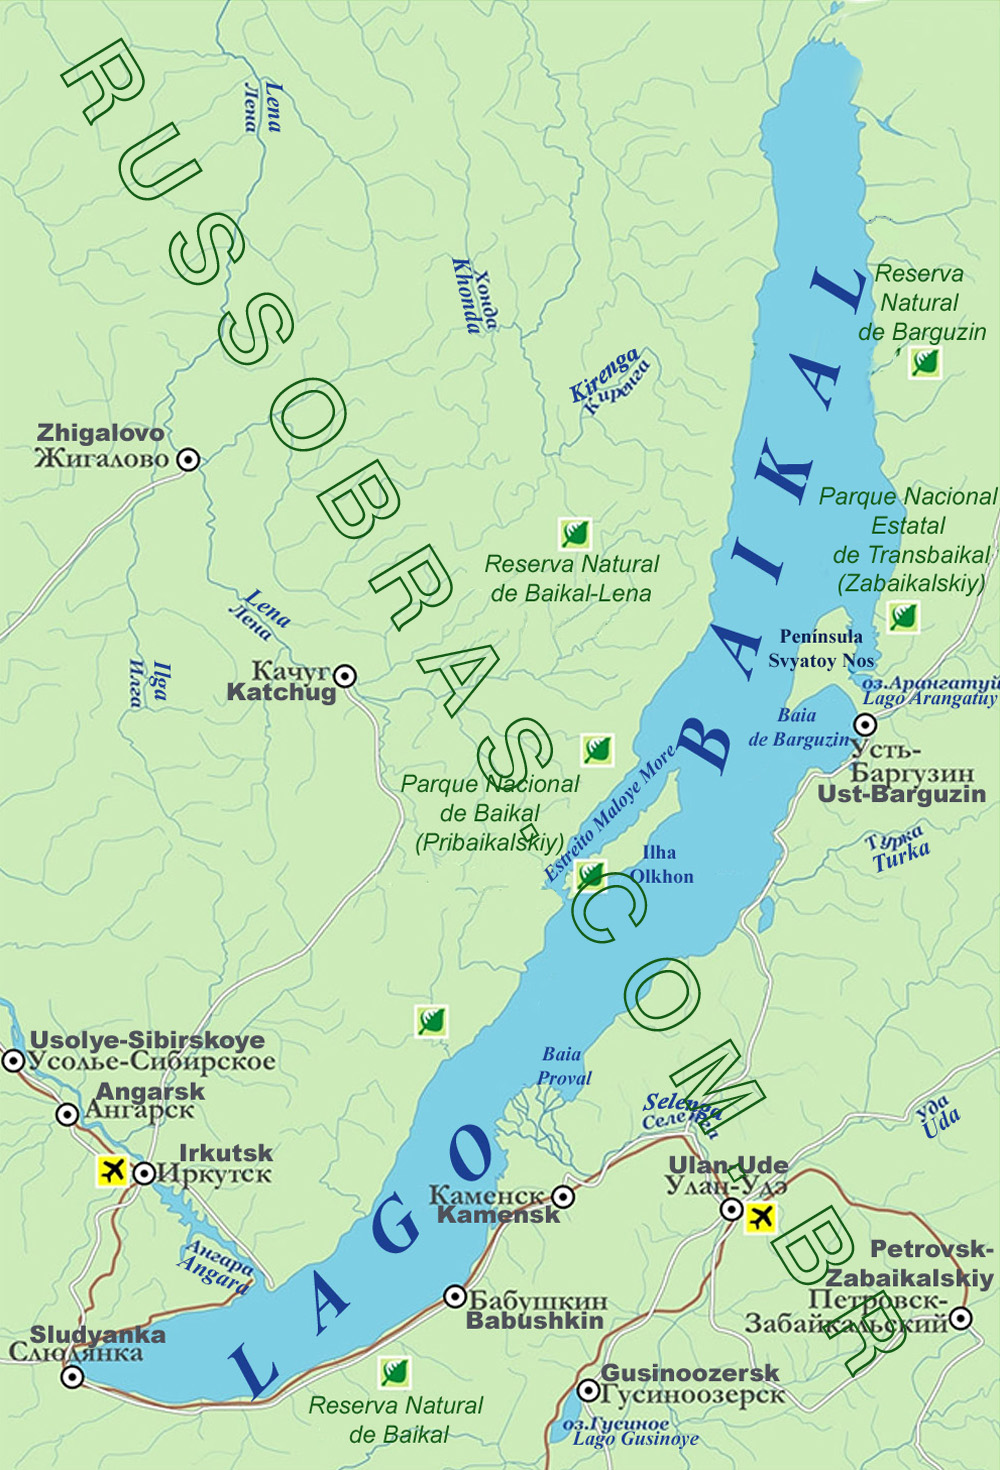 Найти озеро байкал на карте. Река Баргузин на карте Байкала. Озеро Байкал на карте. Озеро Байкал карта географическая. Усть Баргузин на карте Байкала.